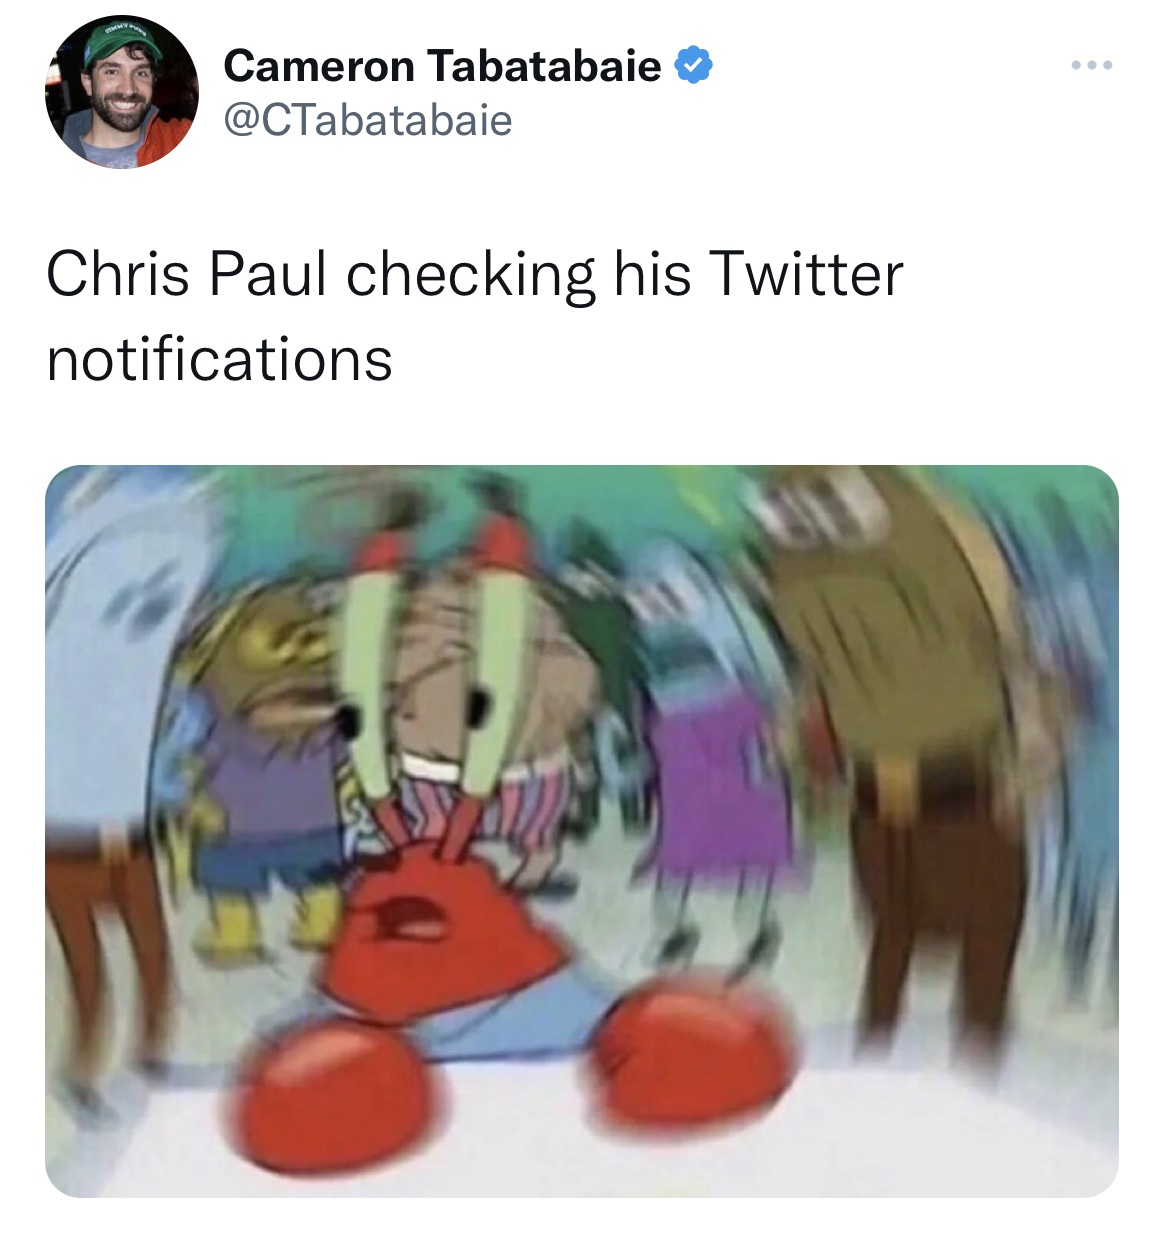 Chris Paul and Kim K memes - social anxiety meme - Cameron Tabatabaie Chris Paul checking his Twitter notifications